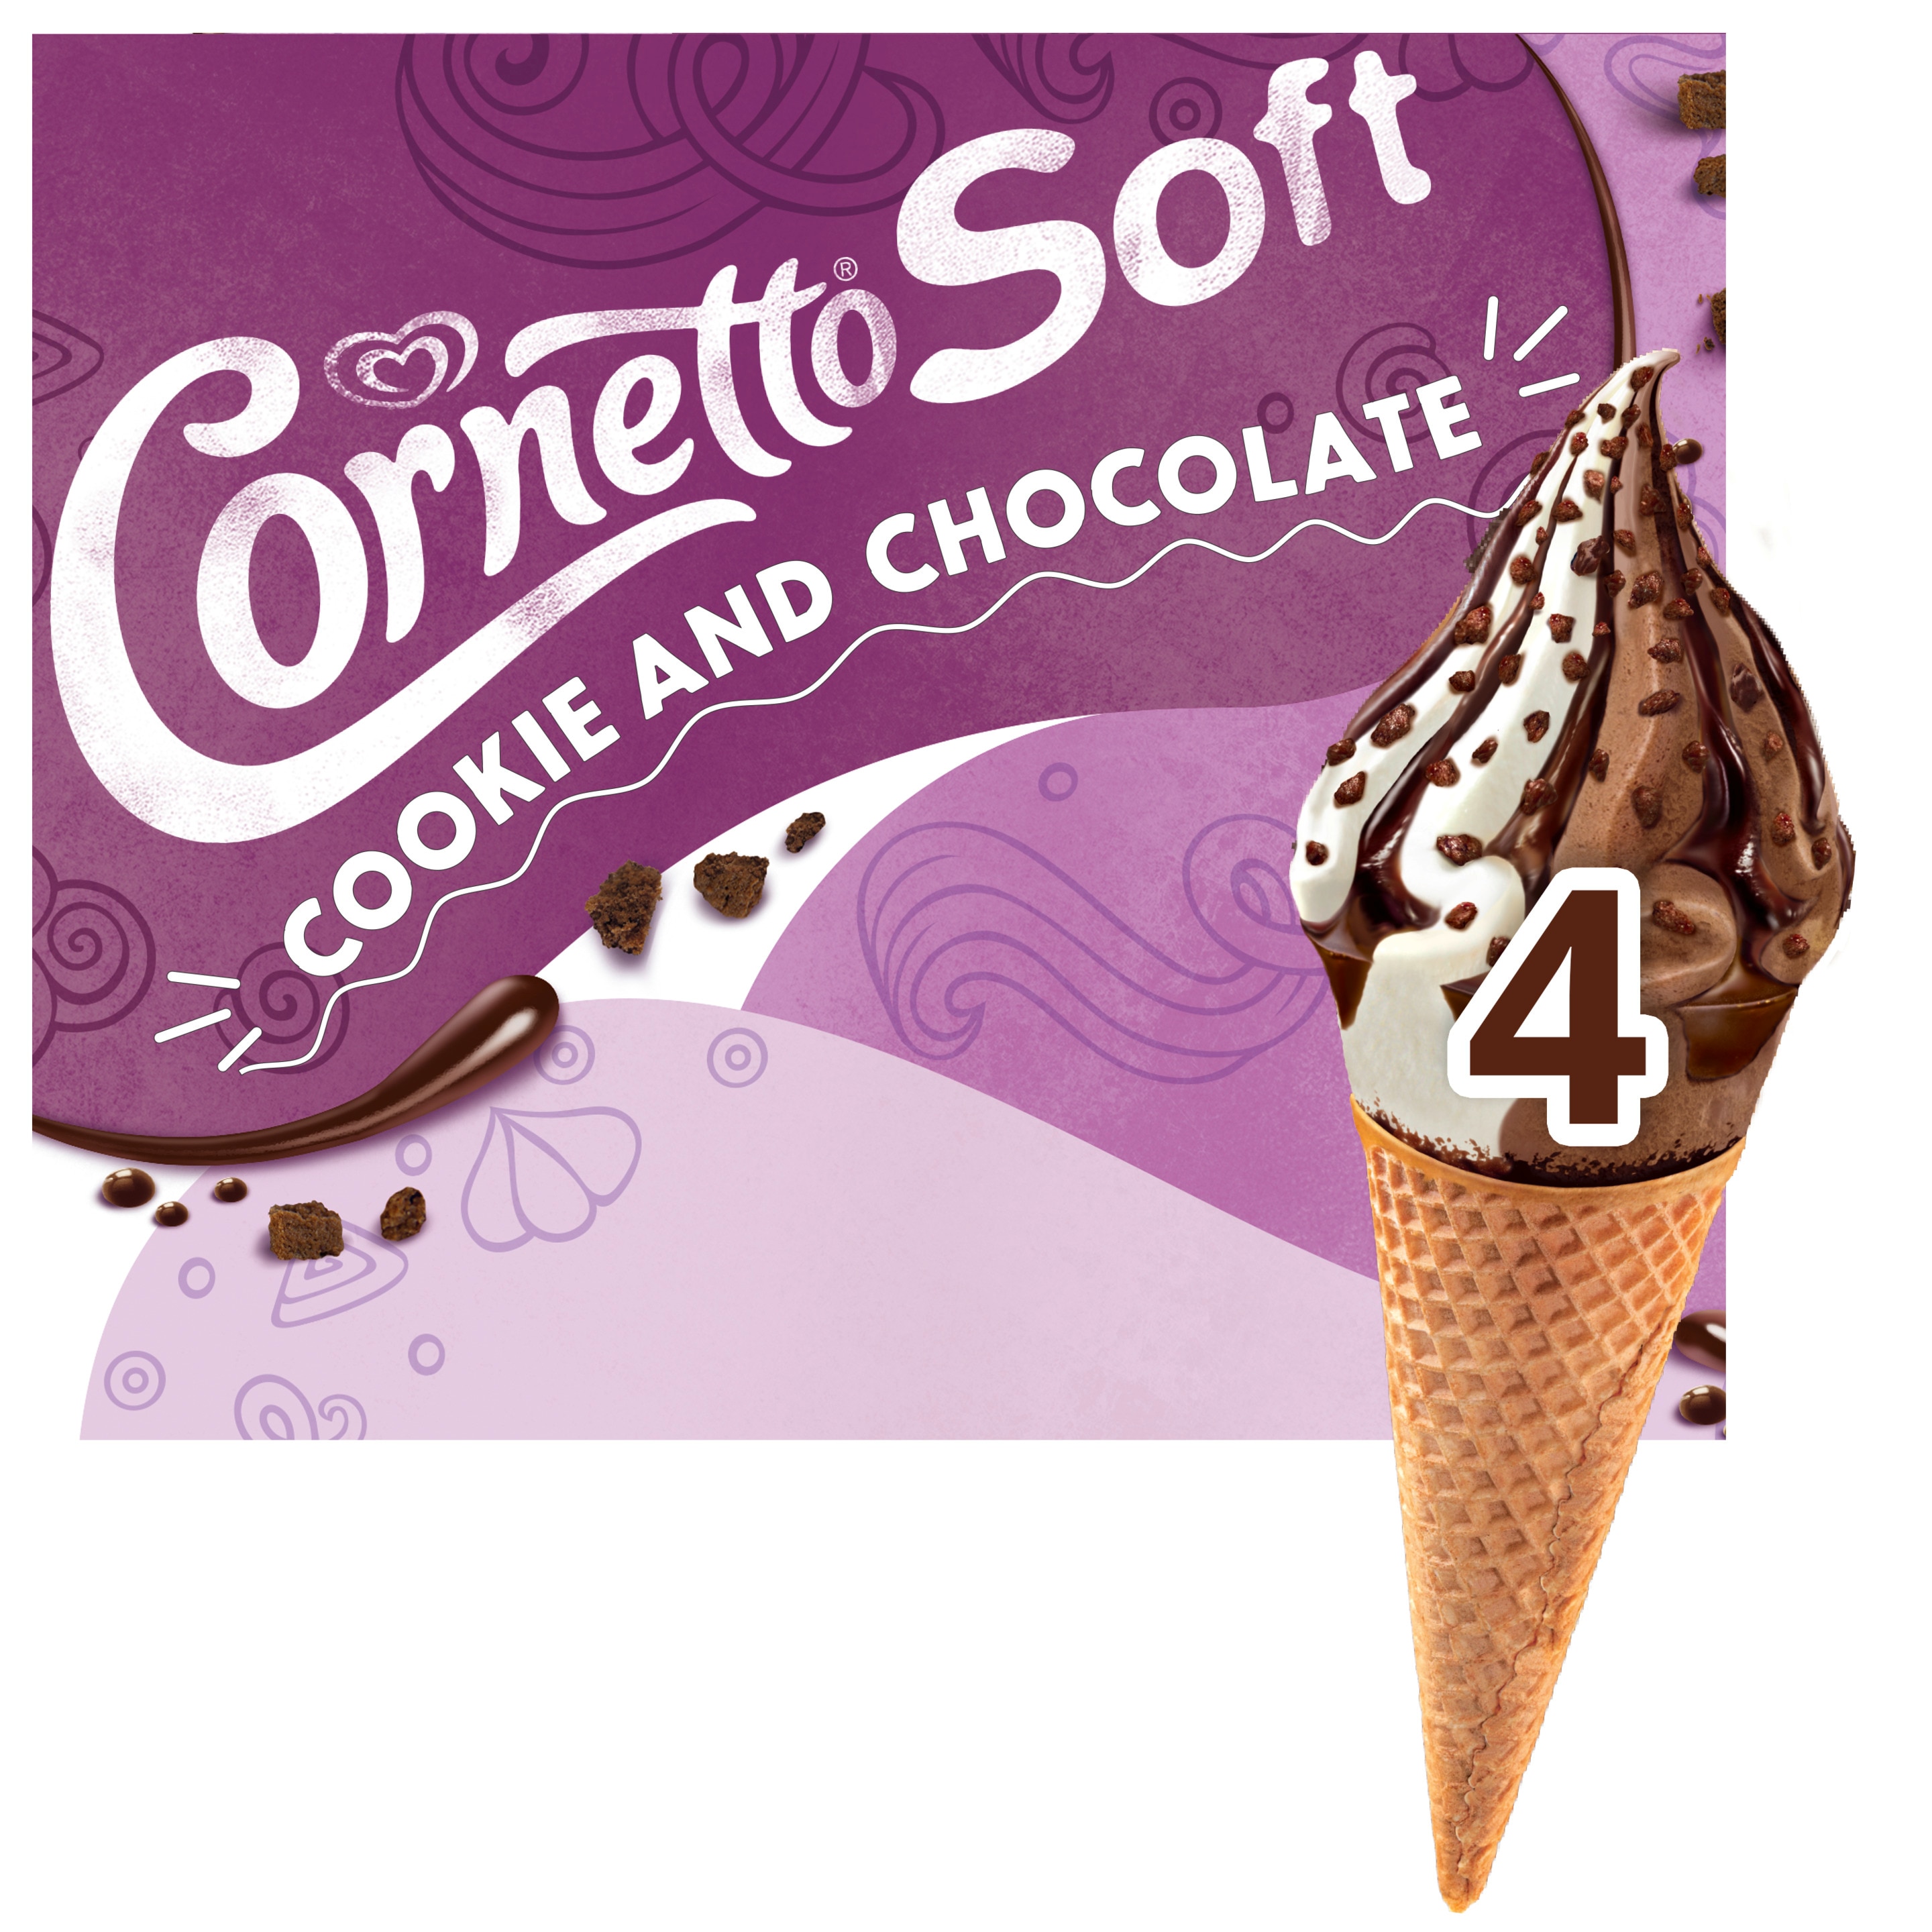 Cornetto Soft Cookies & Chocolate 4 x 140 ml - Langnese Deutschland